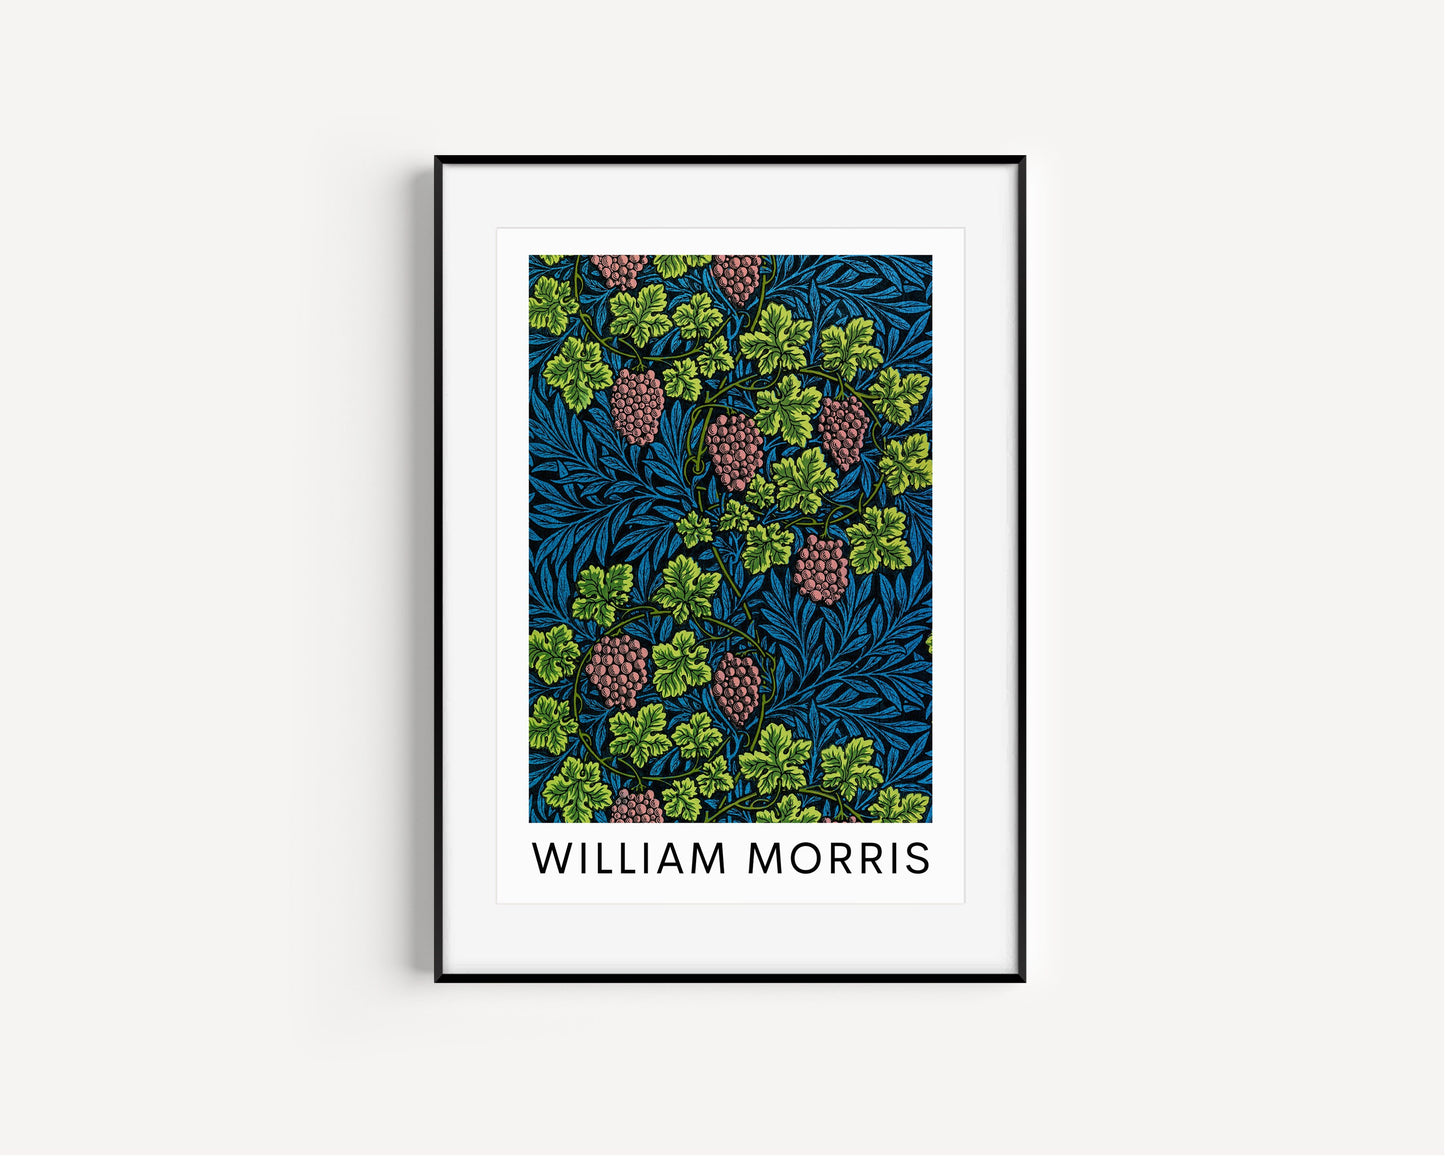 William Morris Art Print, Exhibition Poster, William Morris Print, Art Gallery Poster, Museum Poster, Vintage Poster, Wall Decor, Home Decor